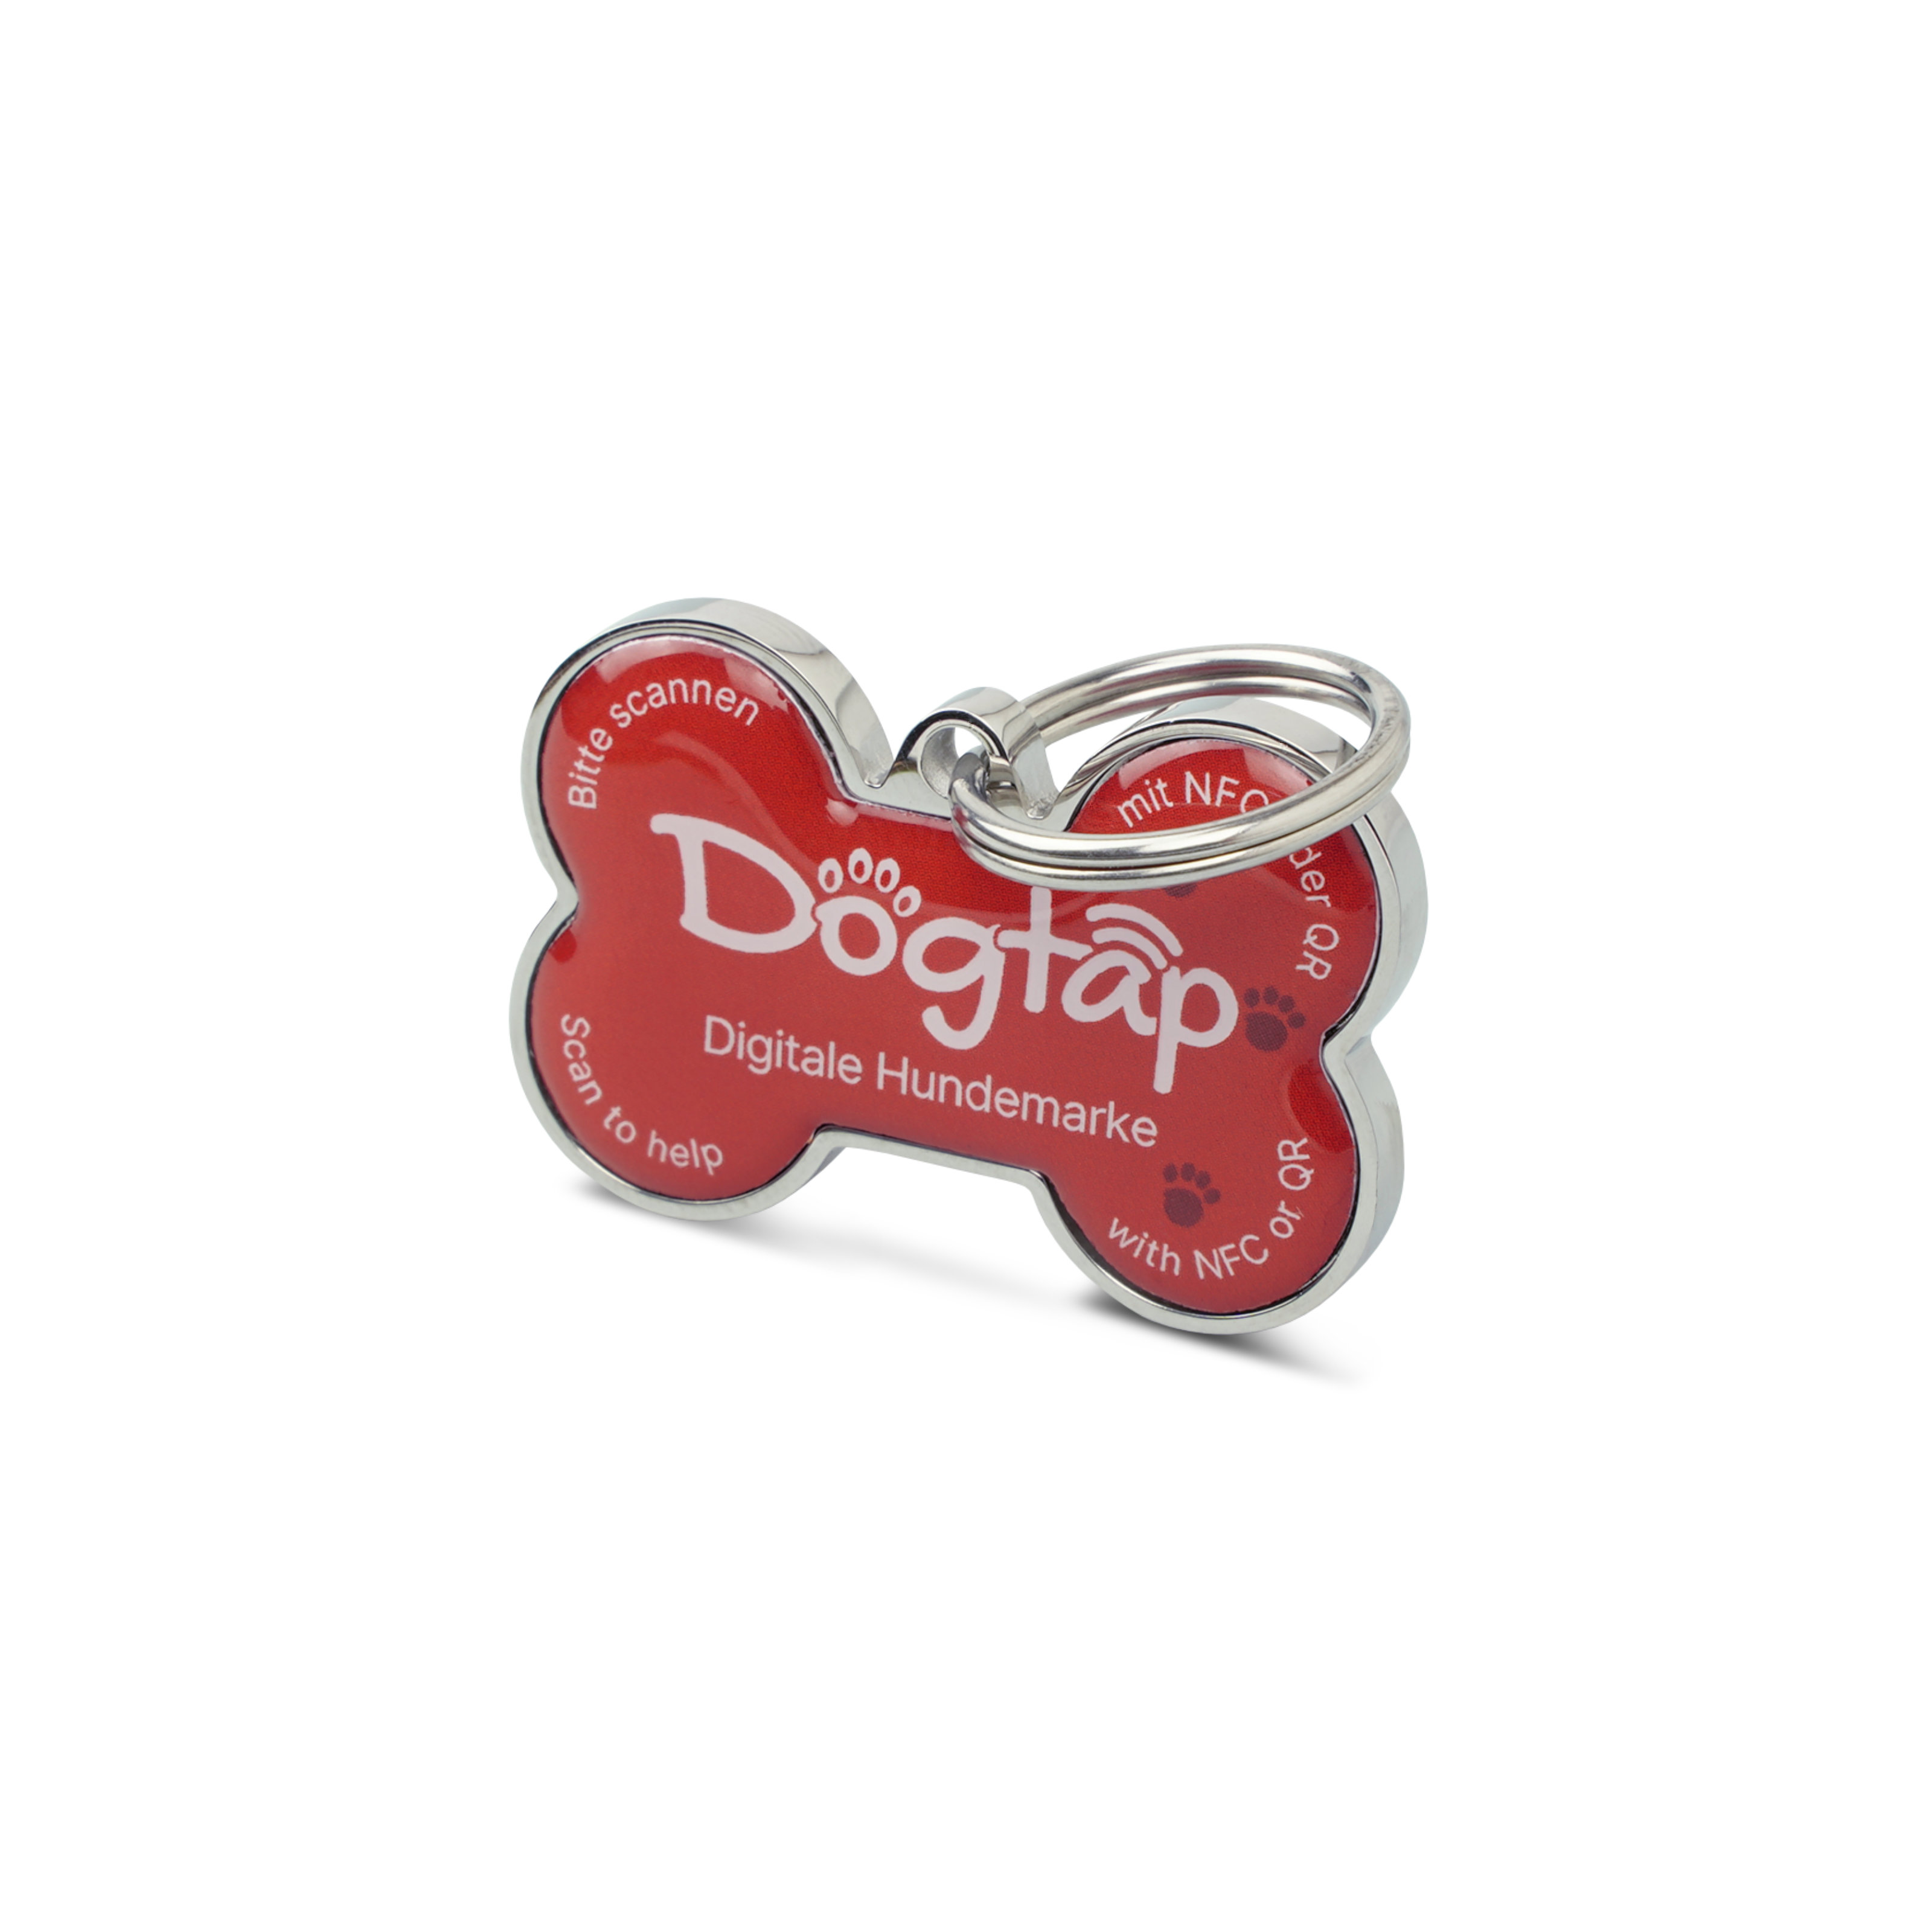 Dogtap Solid - Digitale Hundemarke - PVC / Metall - 41,6 x 28,5 x 4,6 mm - rot